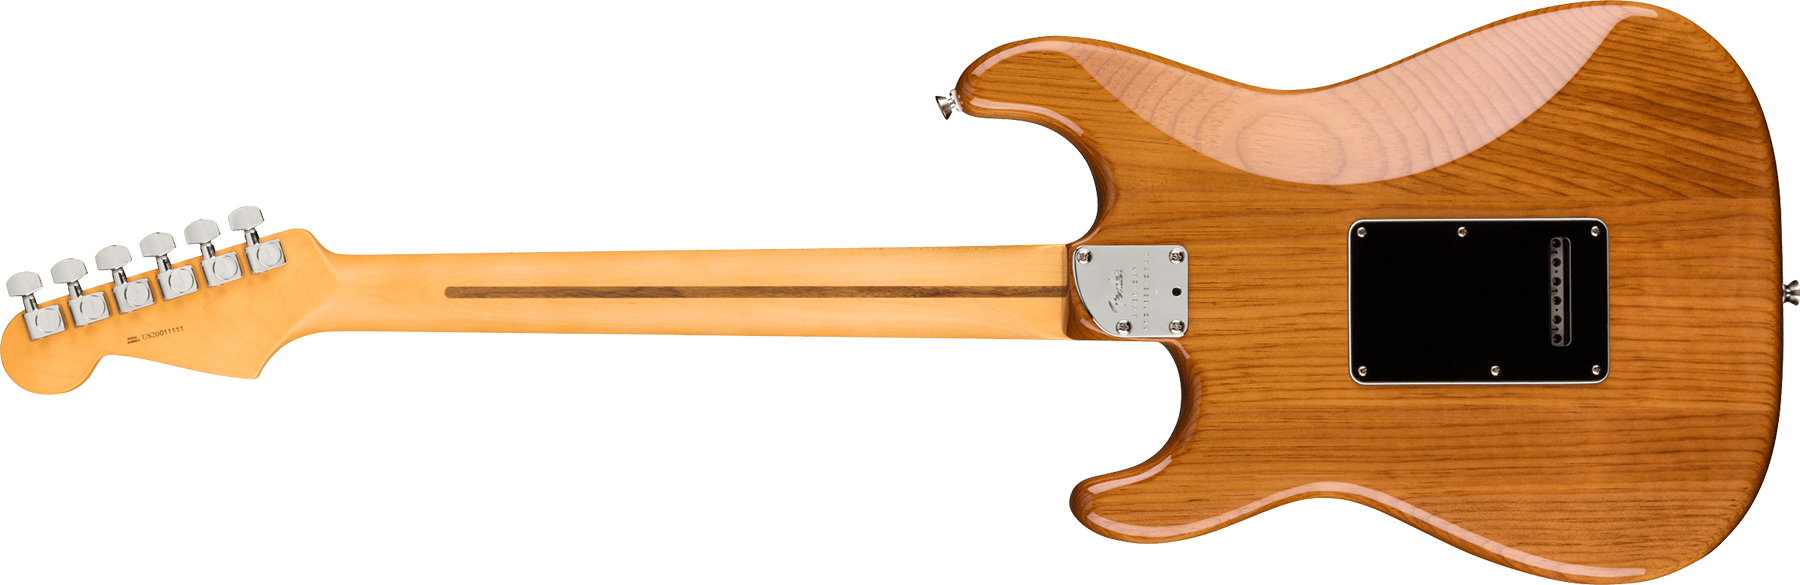 Fender Strat American Professional Ii Usa Mn - Roasted Pine - Elektrische gitaar in Str-vorm - Variation 1